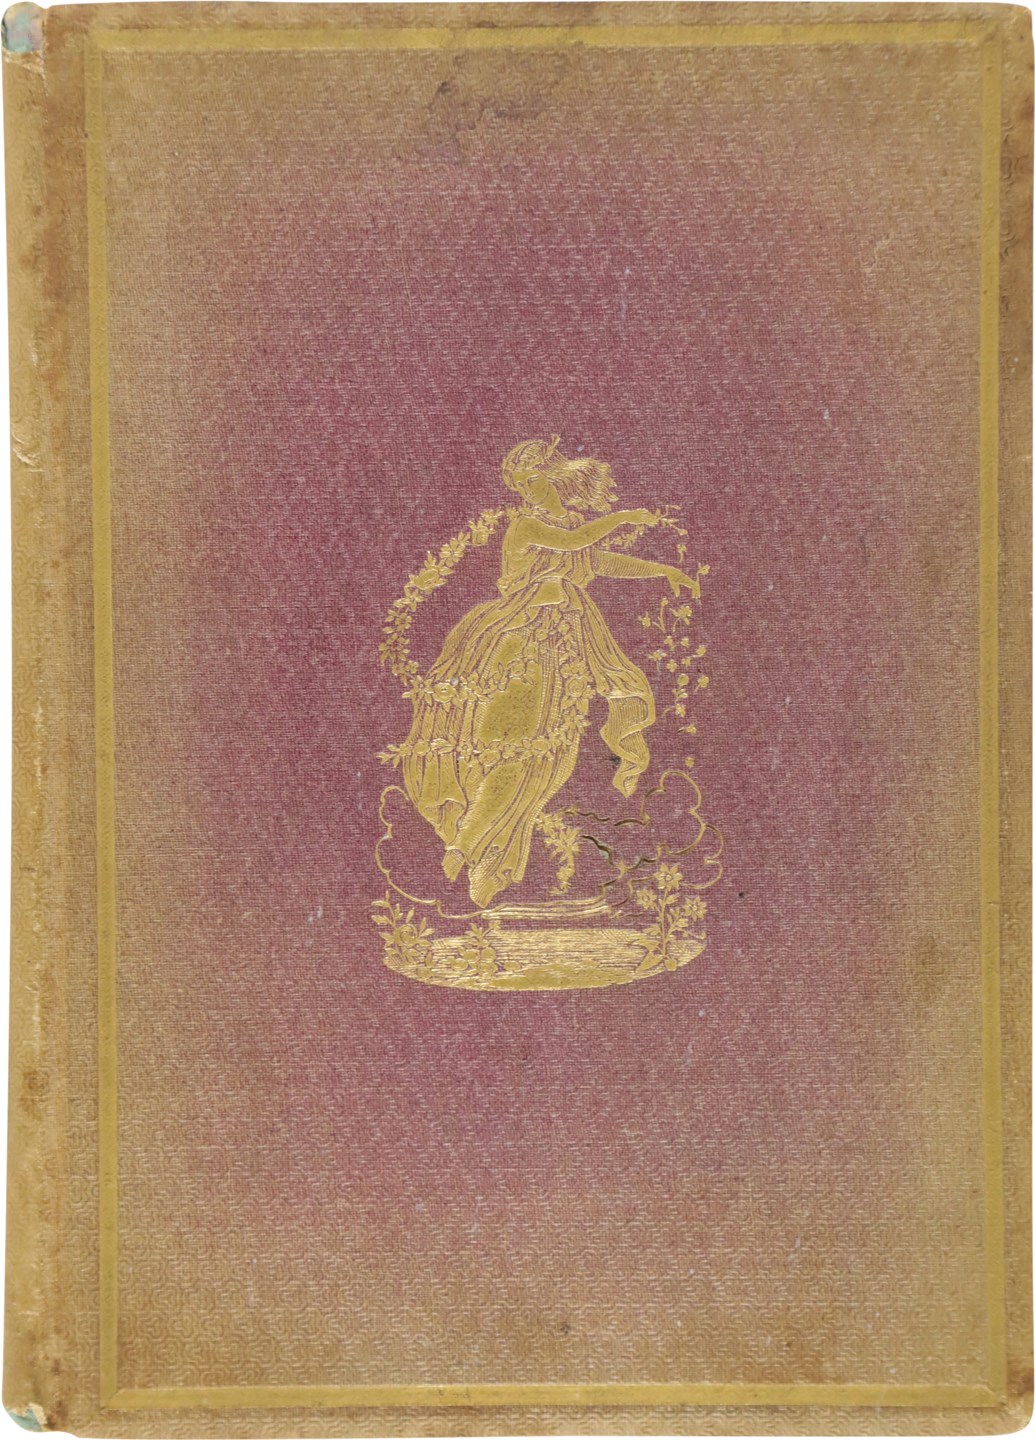 Baseball Memorabilia - 1868 "Fragment" Book of Poetry with Early Baseball Poem